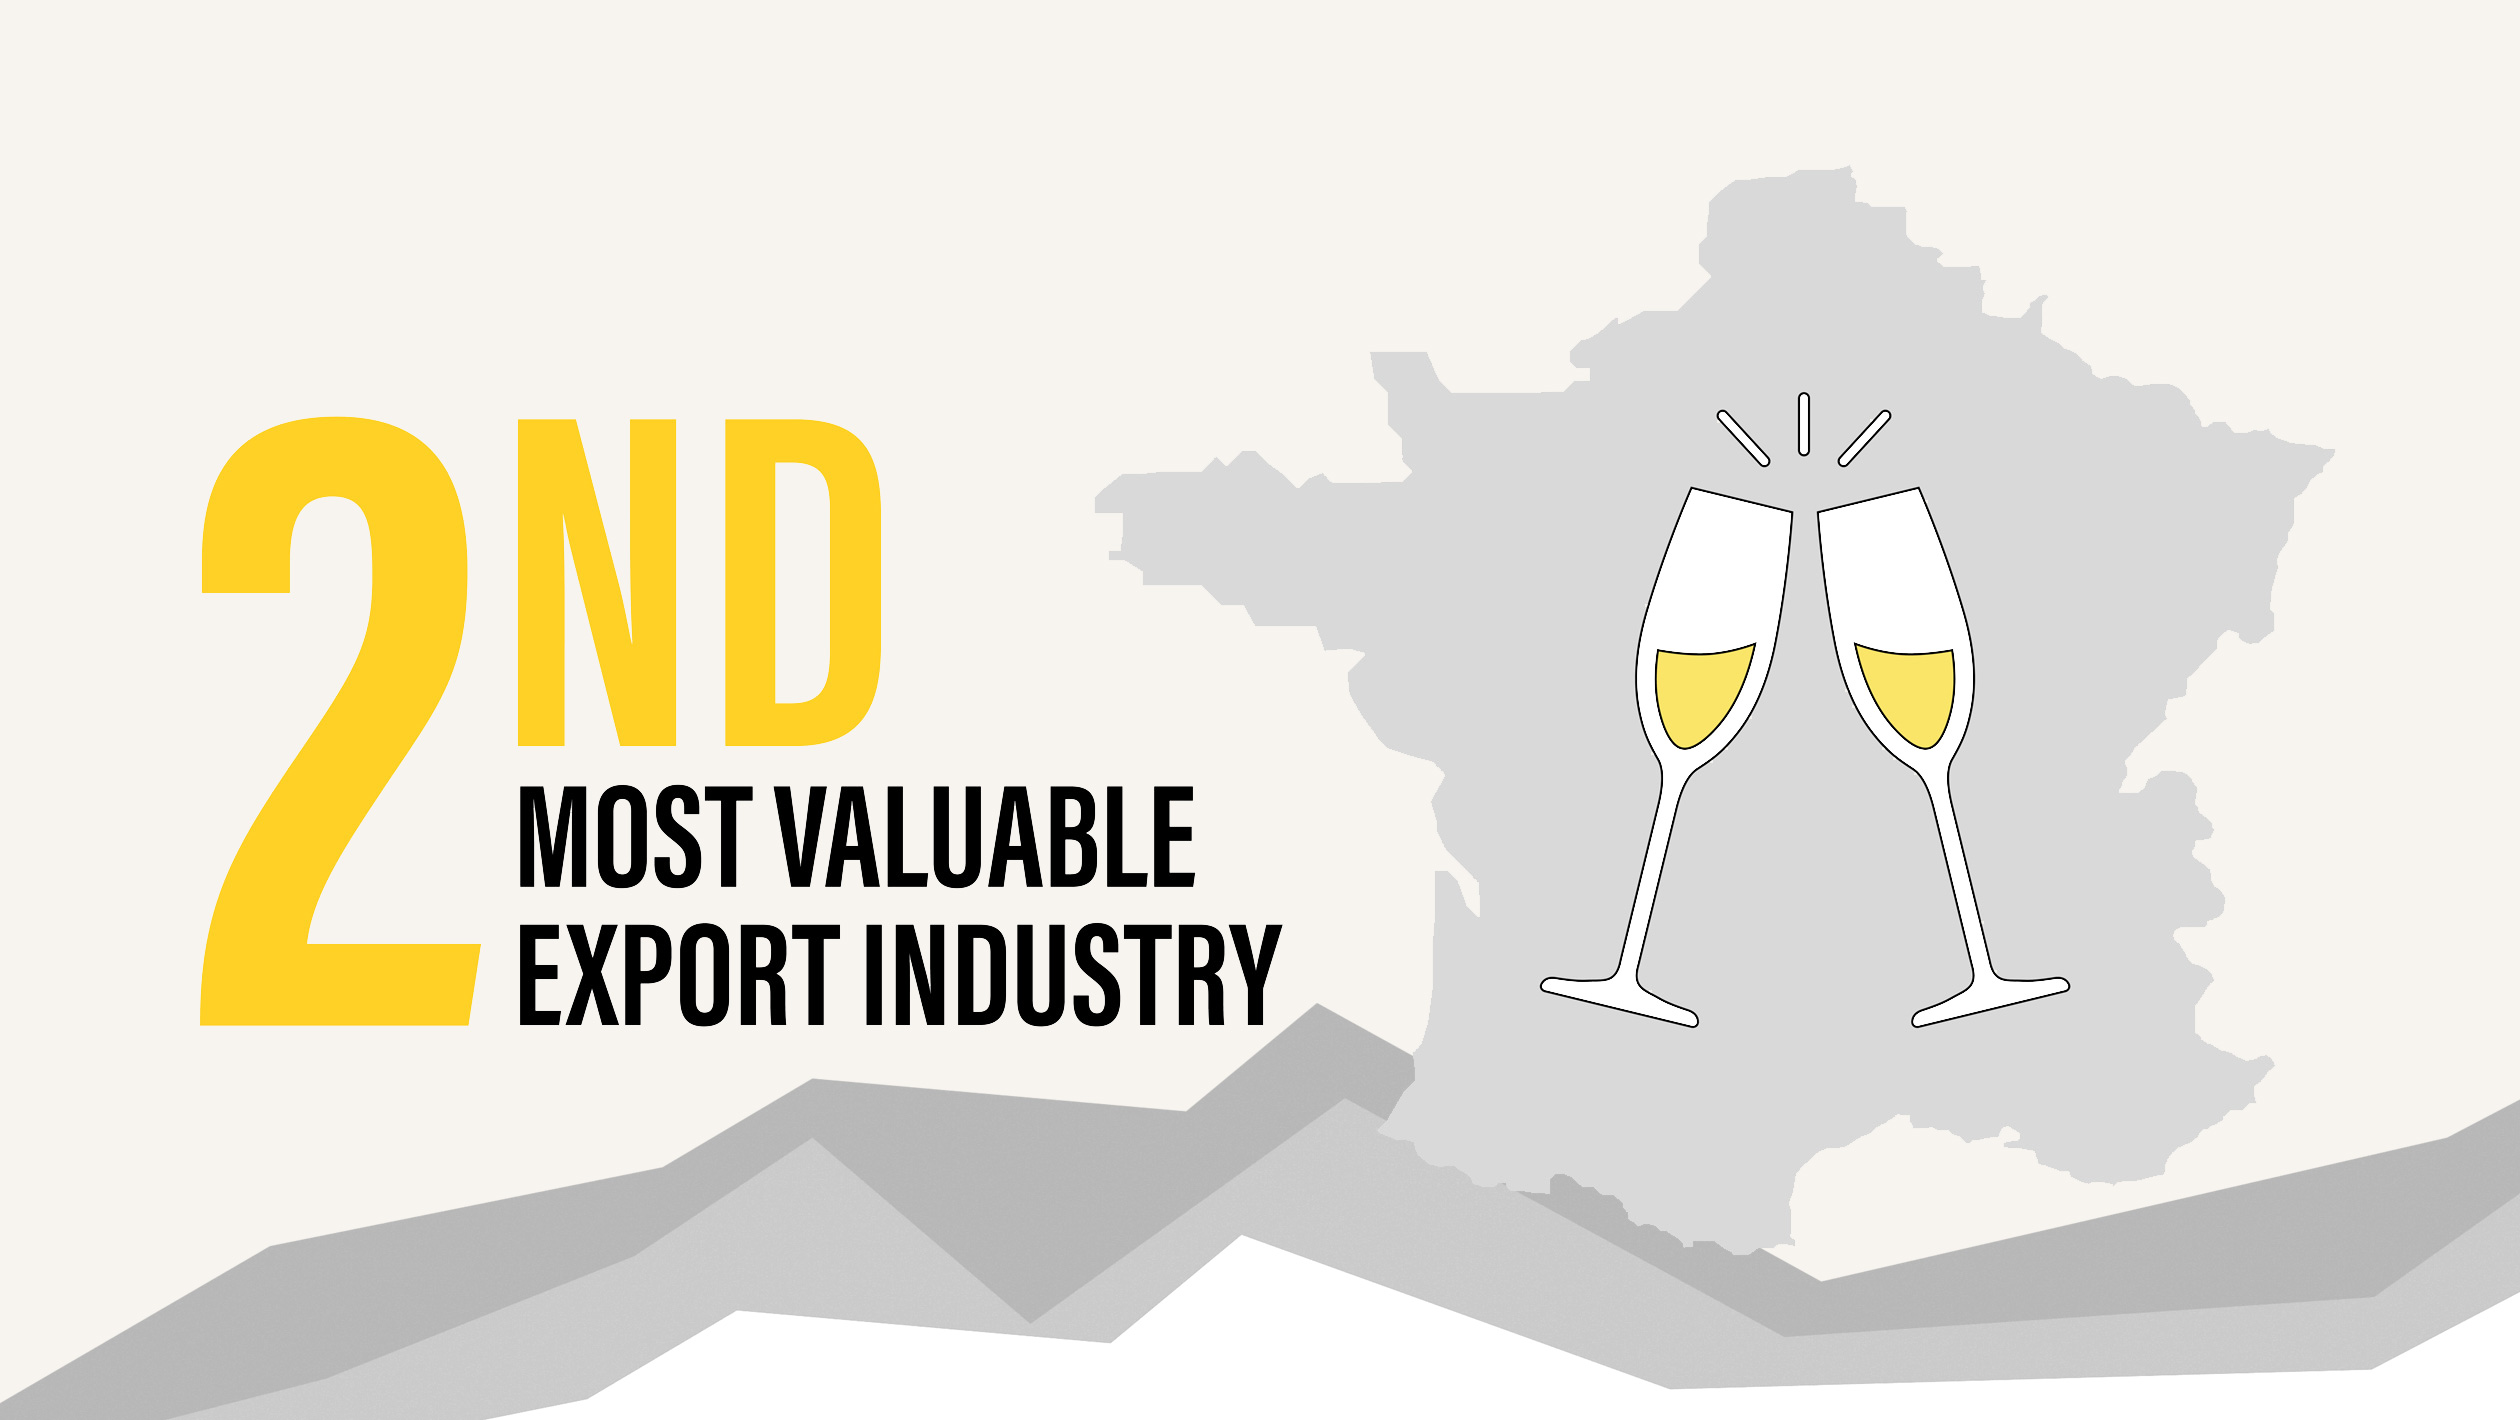 Champagne Sales Reach Record High in 2021 - Elite Traveler